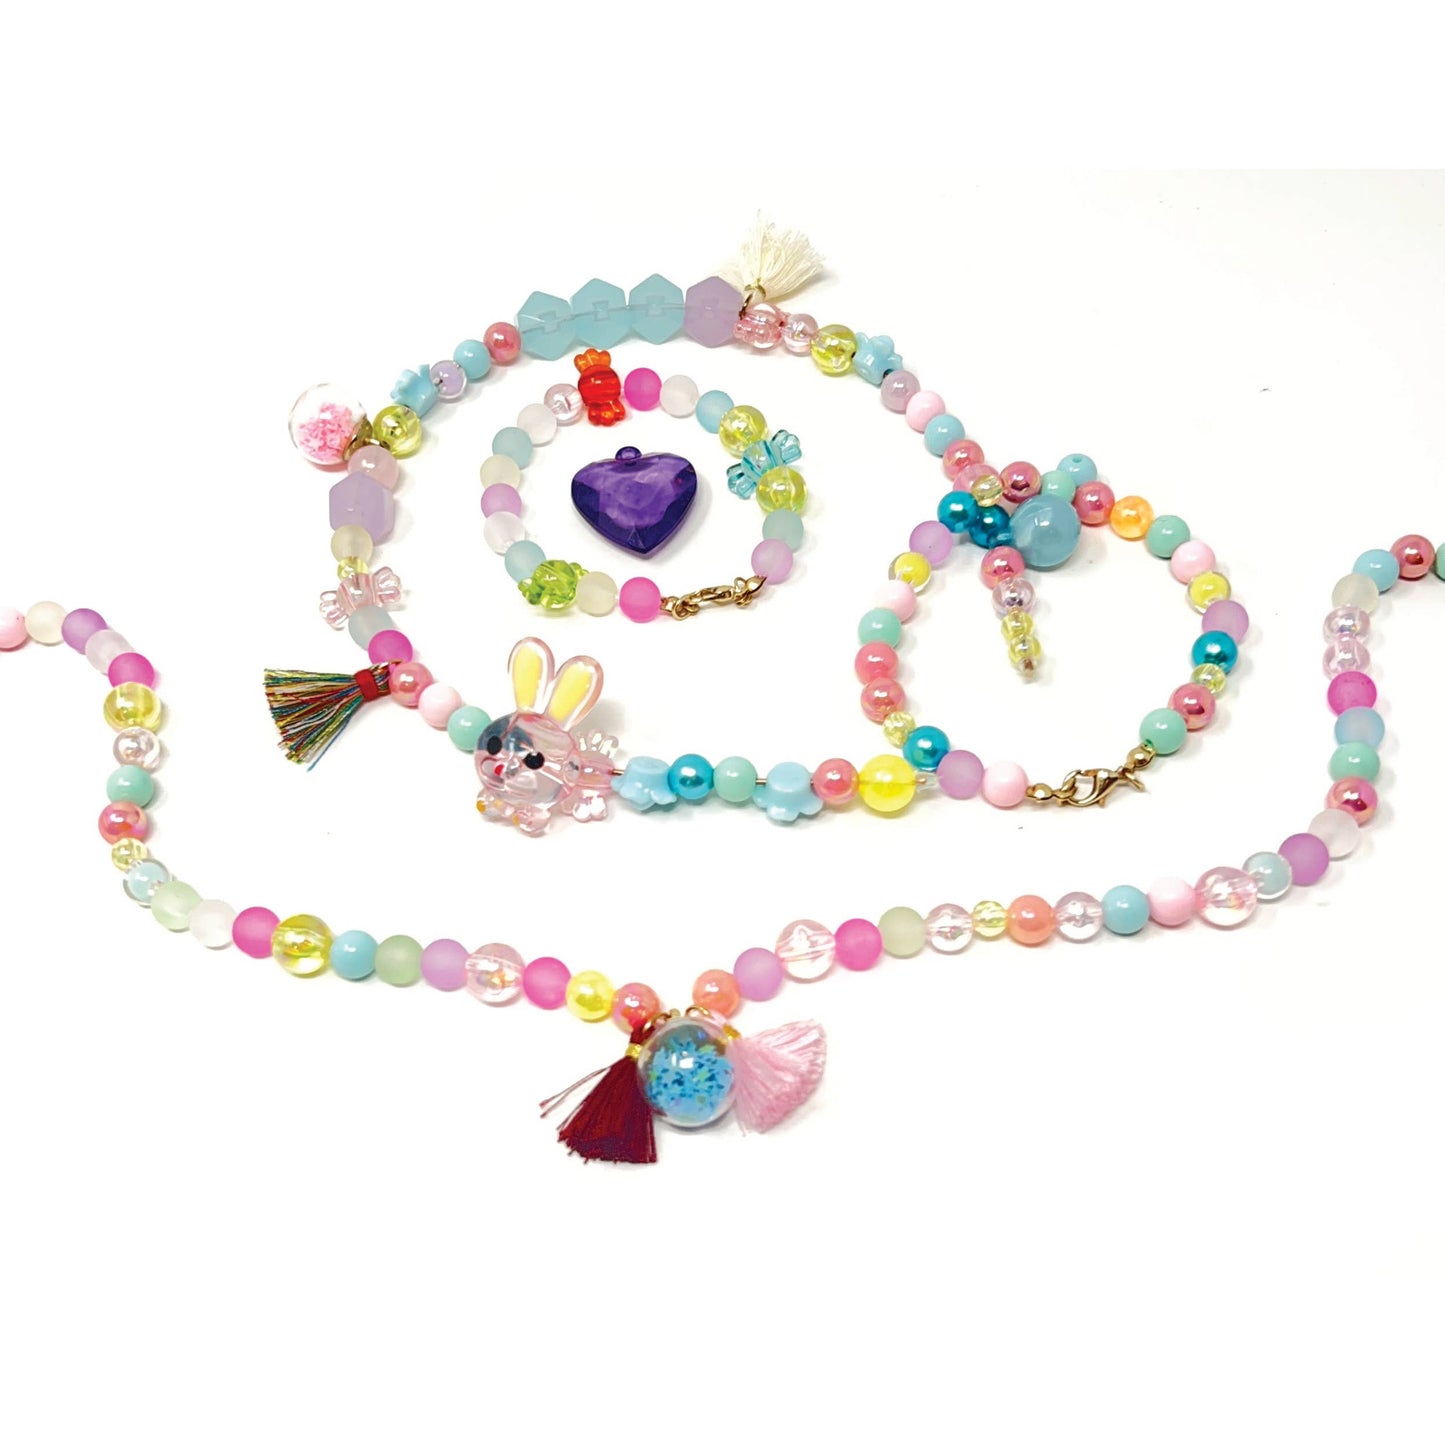 Feyi Fay's Charming Jewelry Making Kit - Kids' DIY Craft Kit